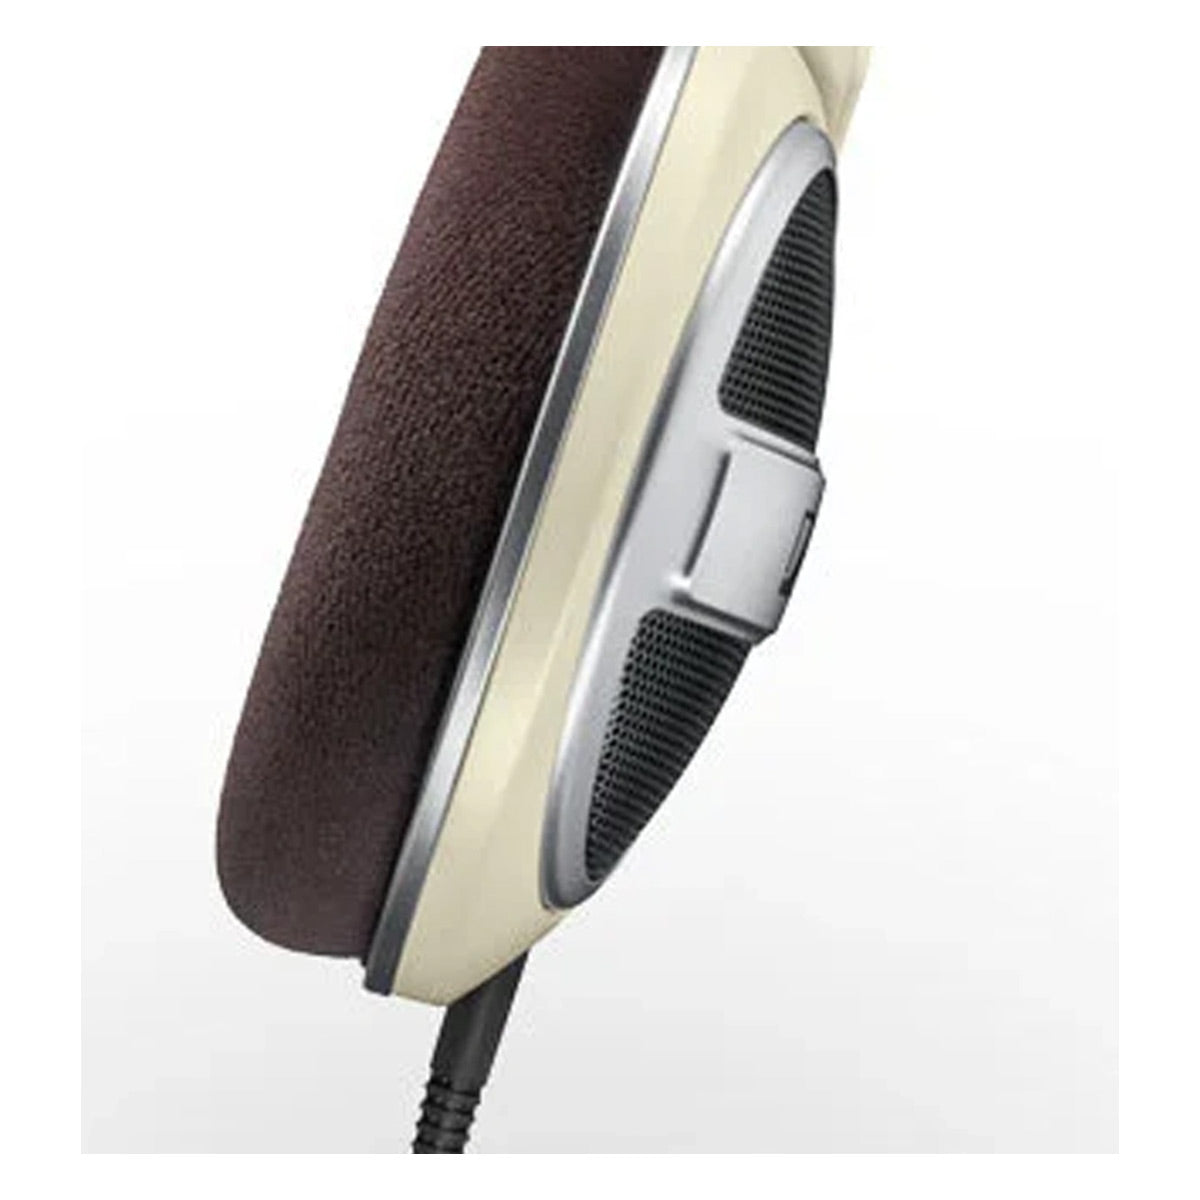 Sennheiser HD 599 Around-Ear Headphones